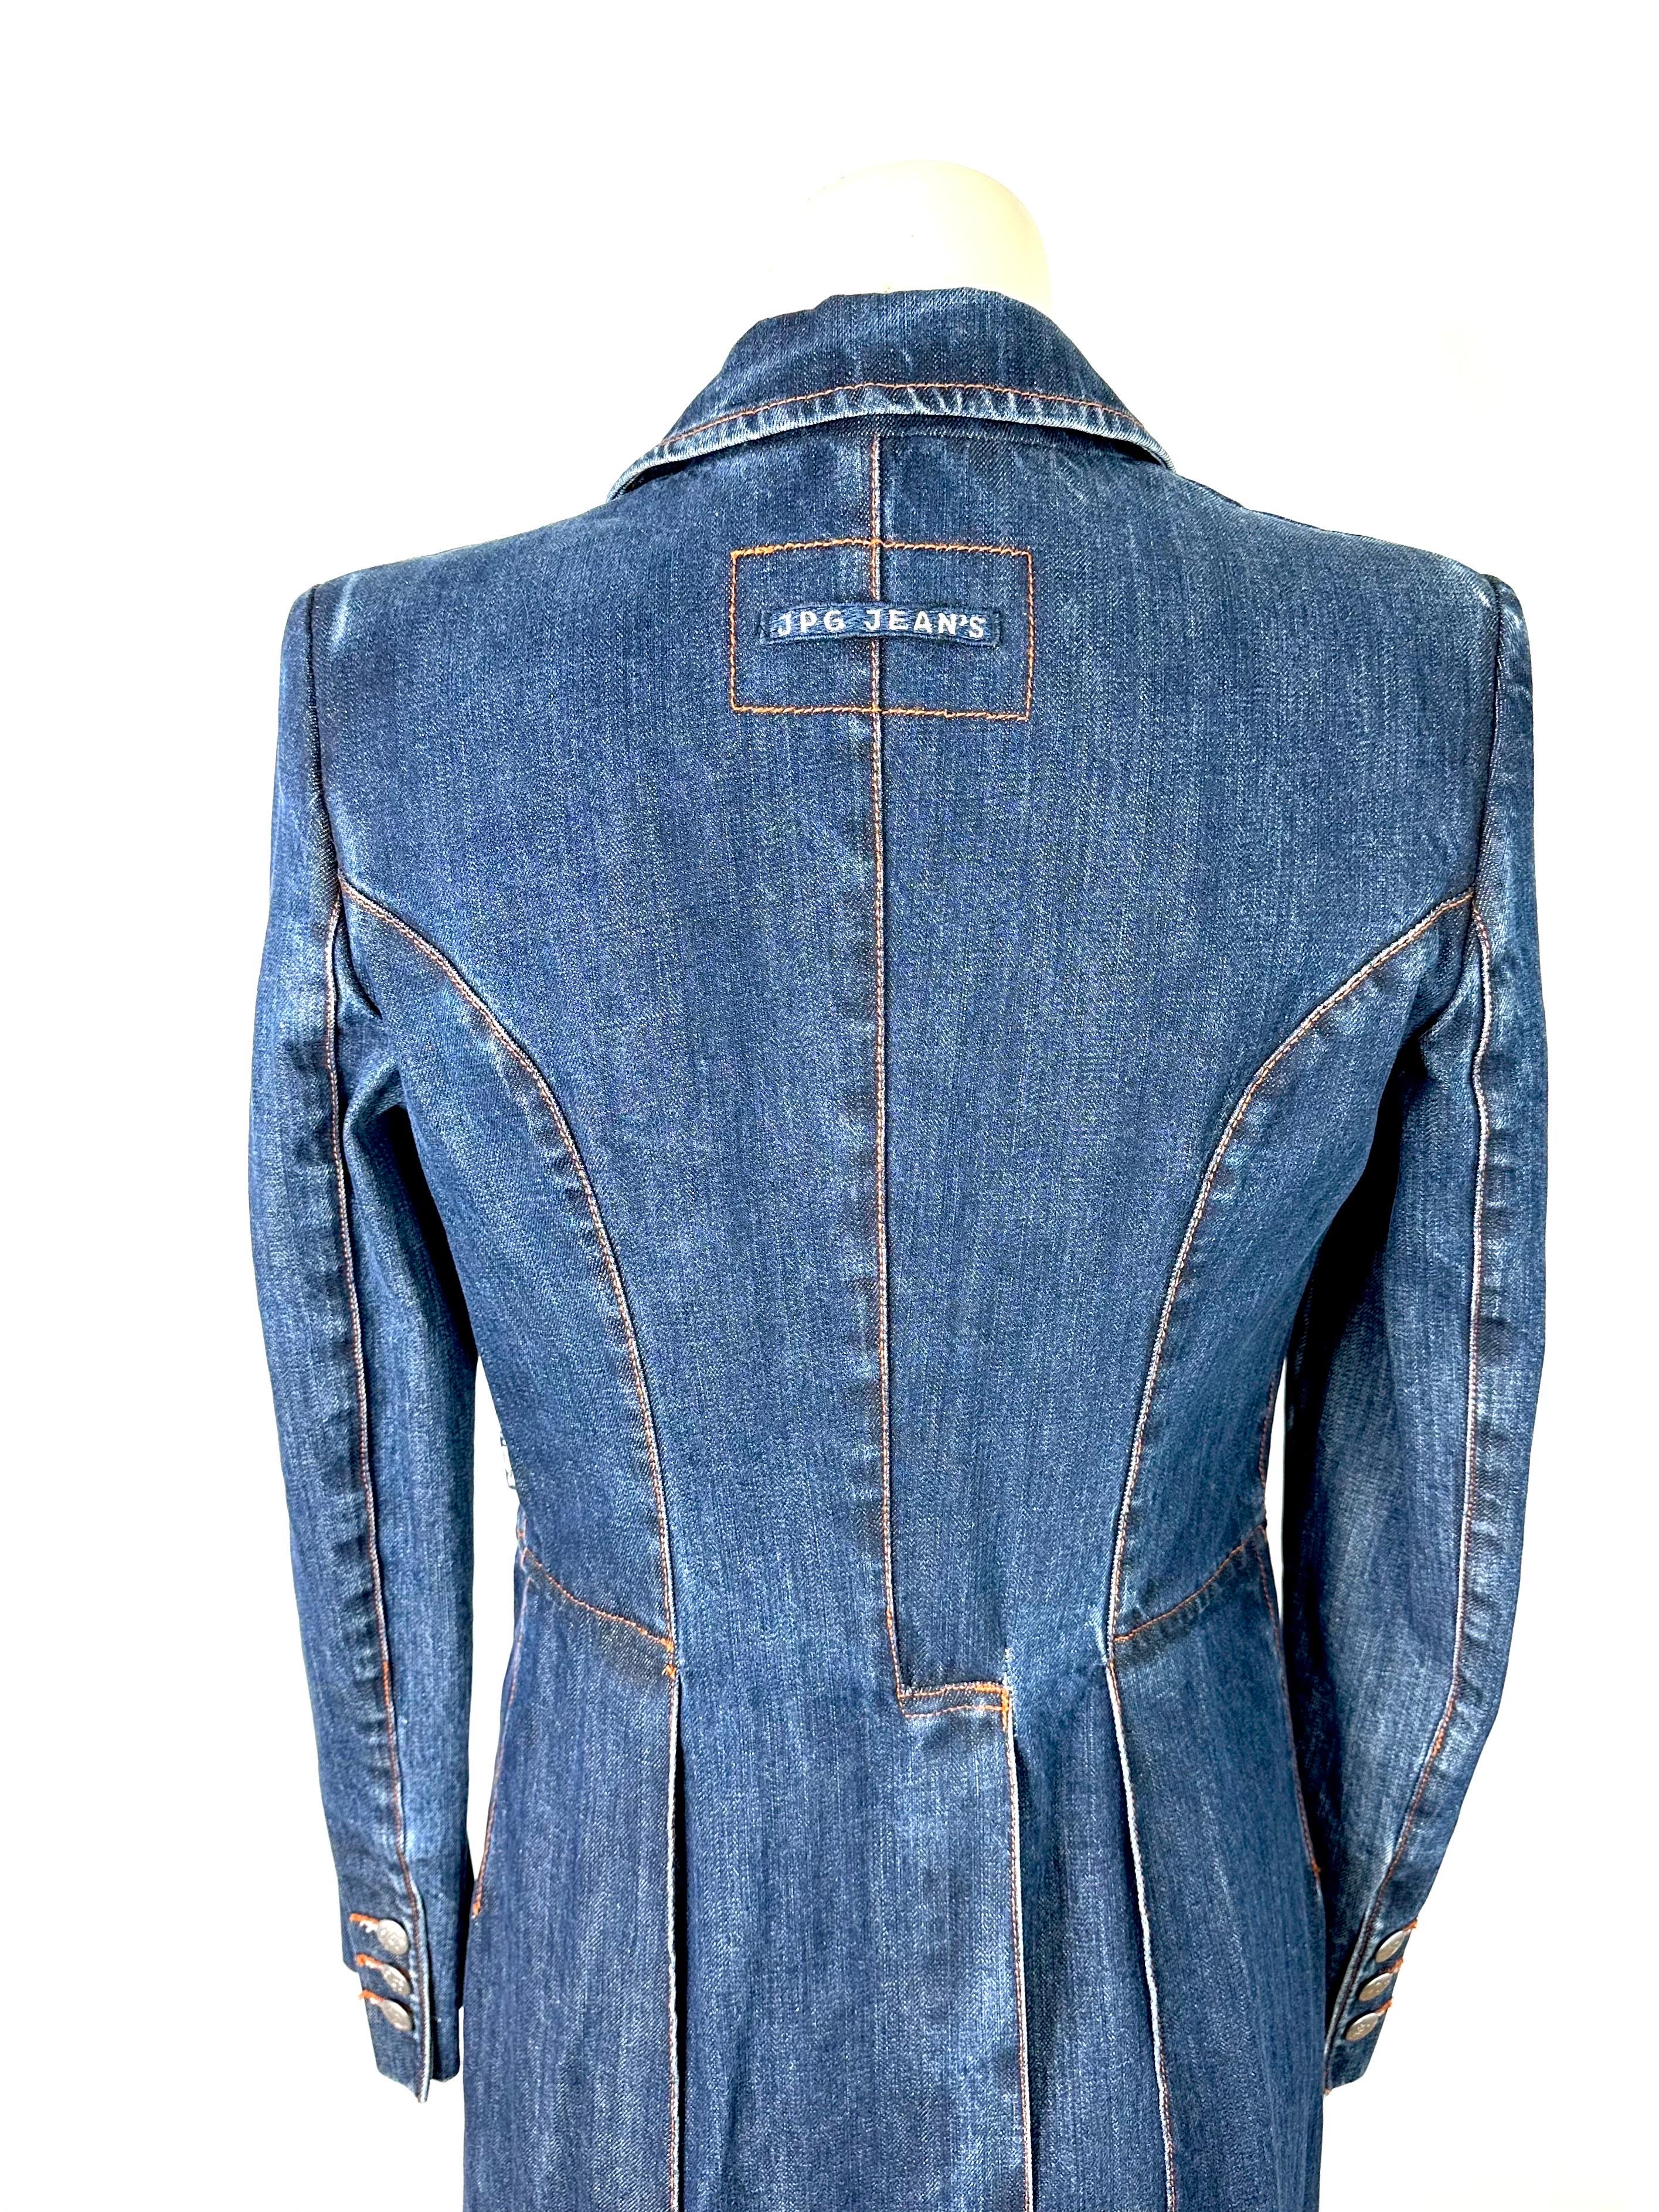 Jean Paul Gaultier vintage jeans tails jacket For Sale 5